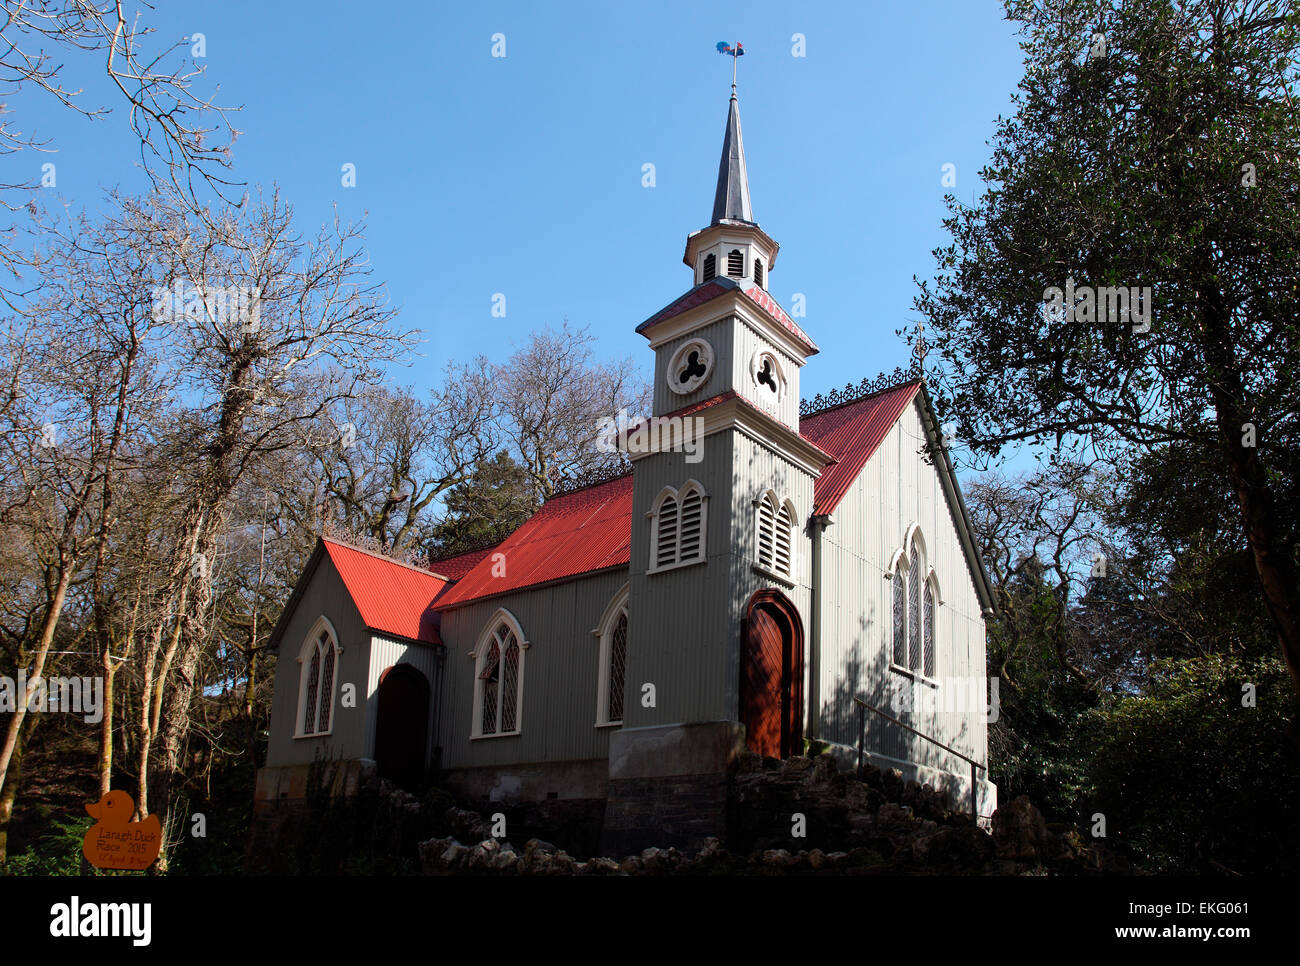 St Peter Zinn Tabernakel, Wellpappe Zinn Kirche in Irland im 19. Jahrhundert aus der Schweiz importiert. Stockfoto